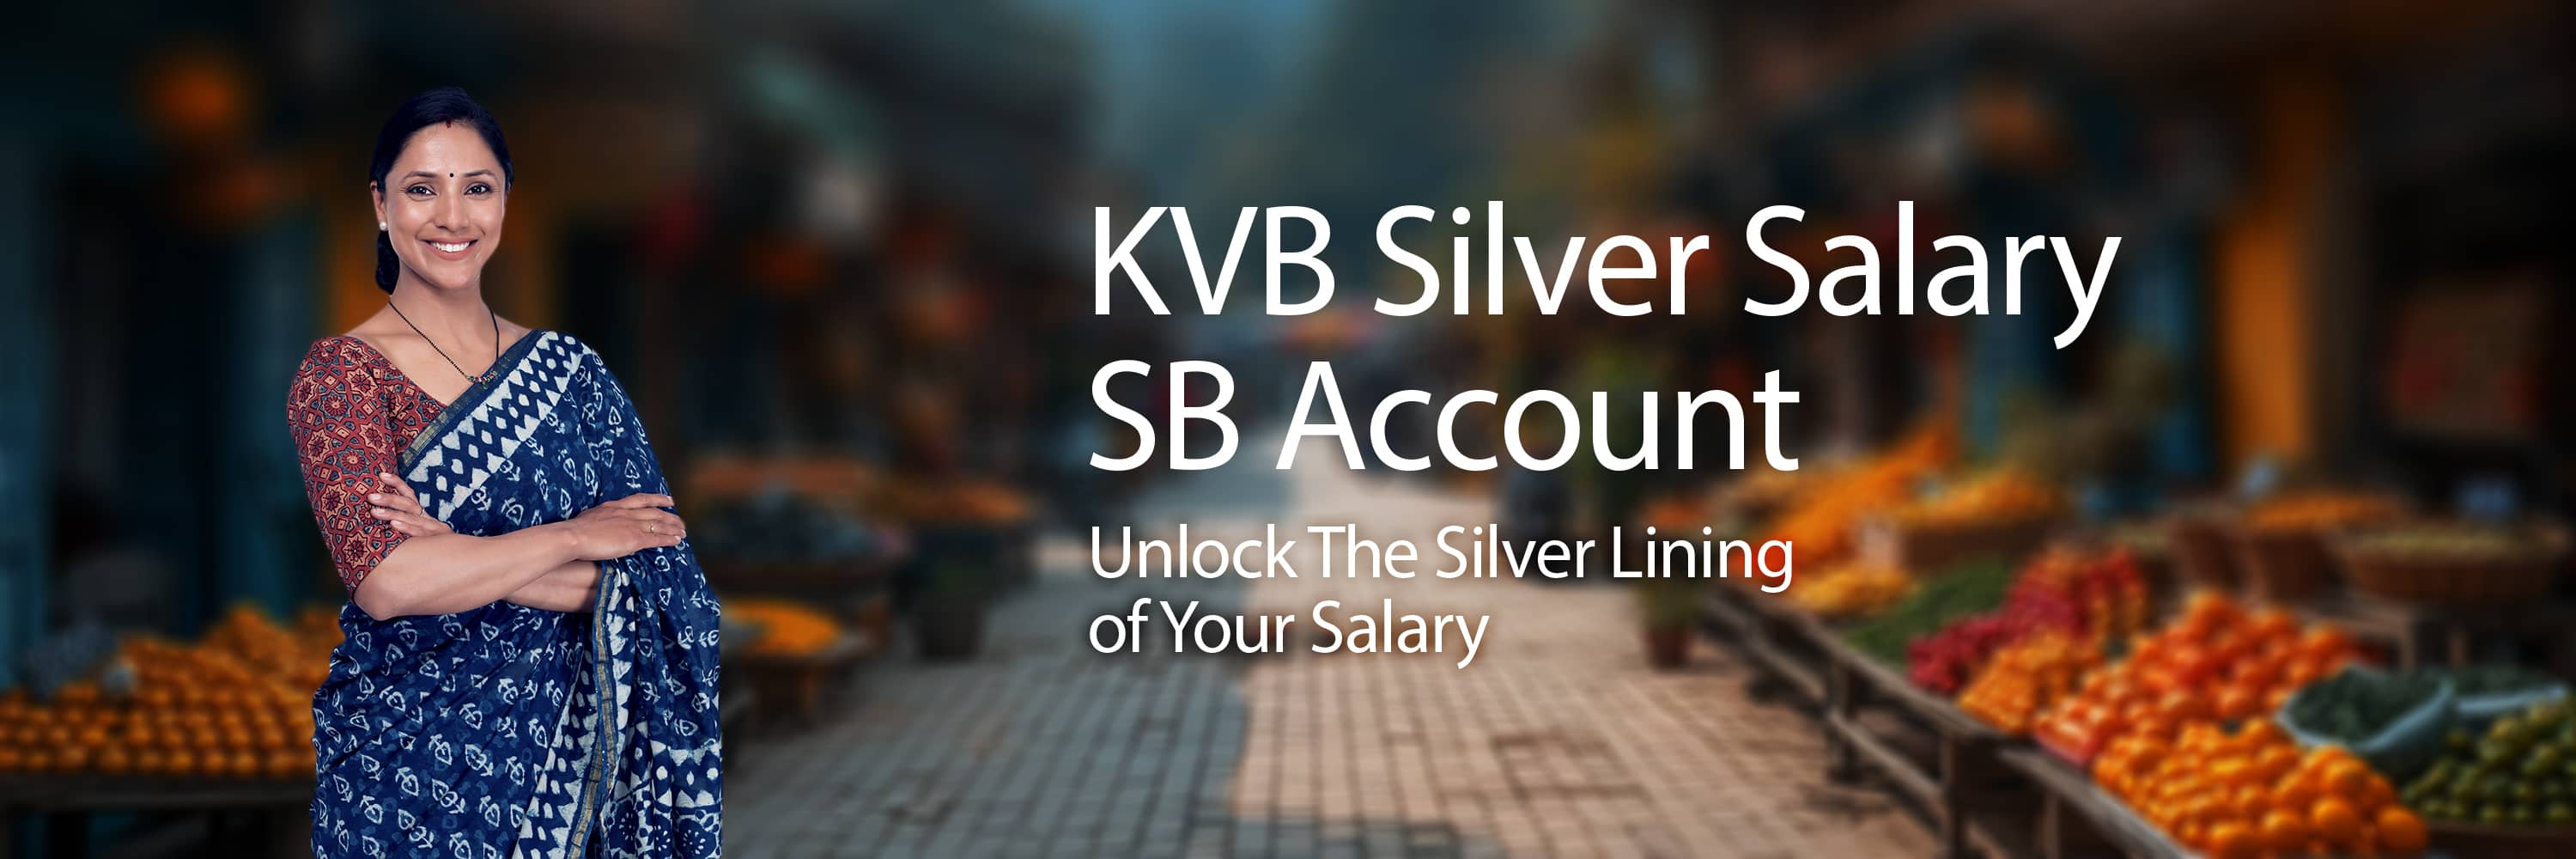 KVB Silver Salary SB Account